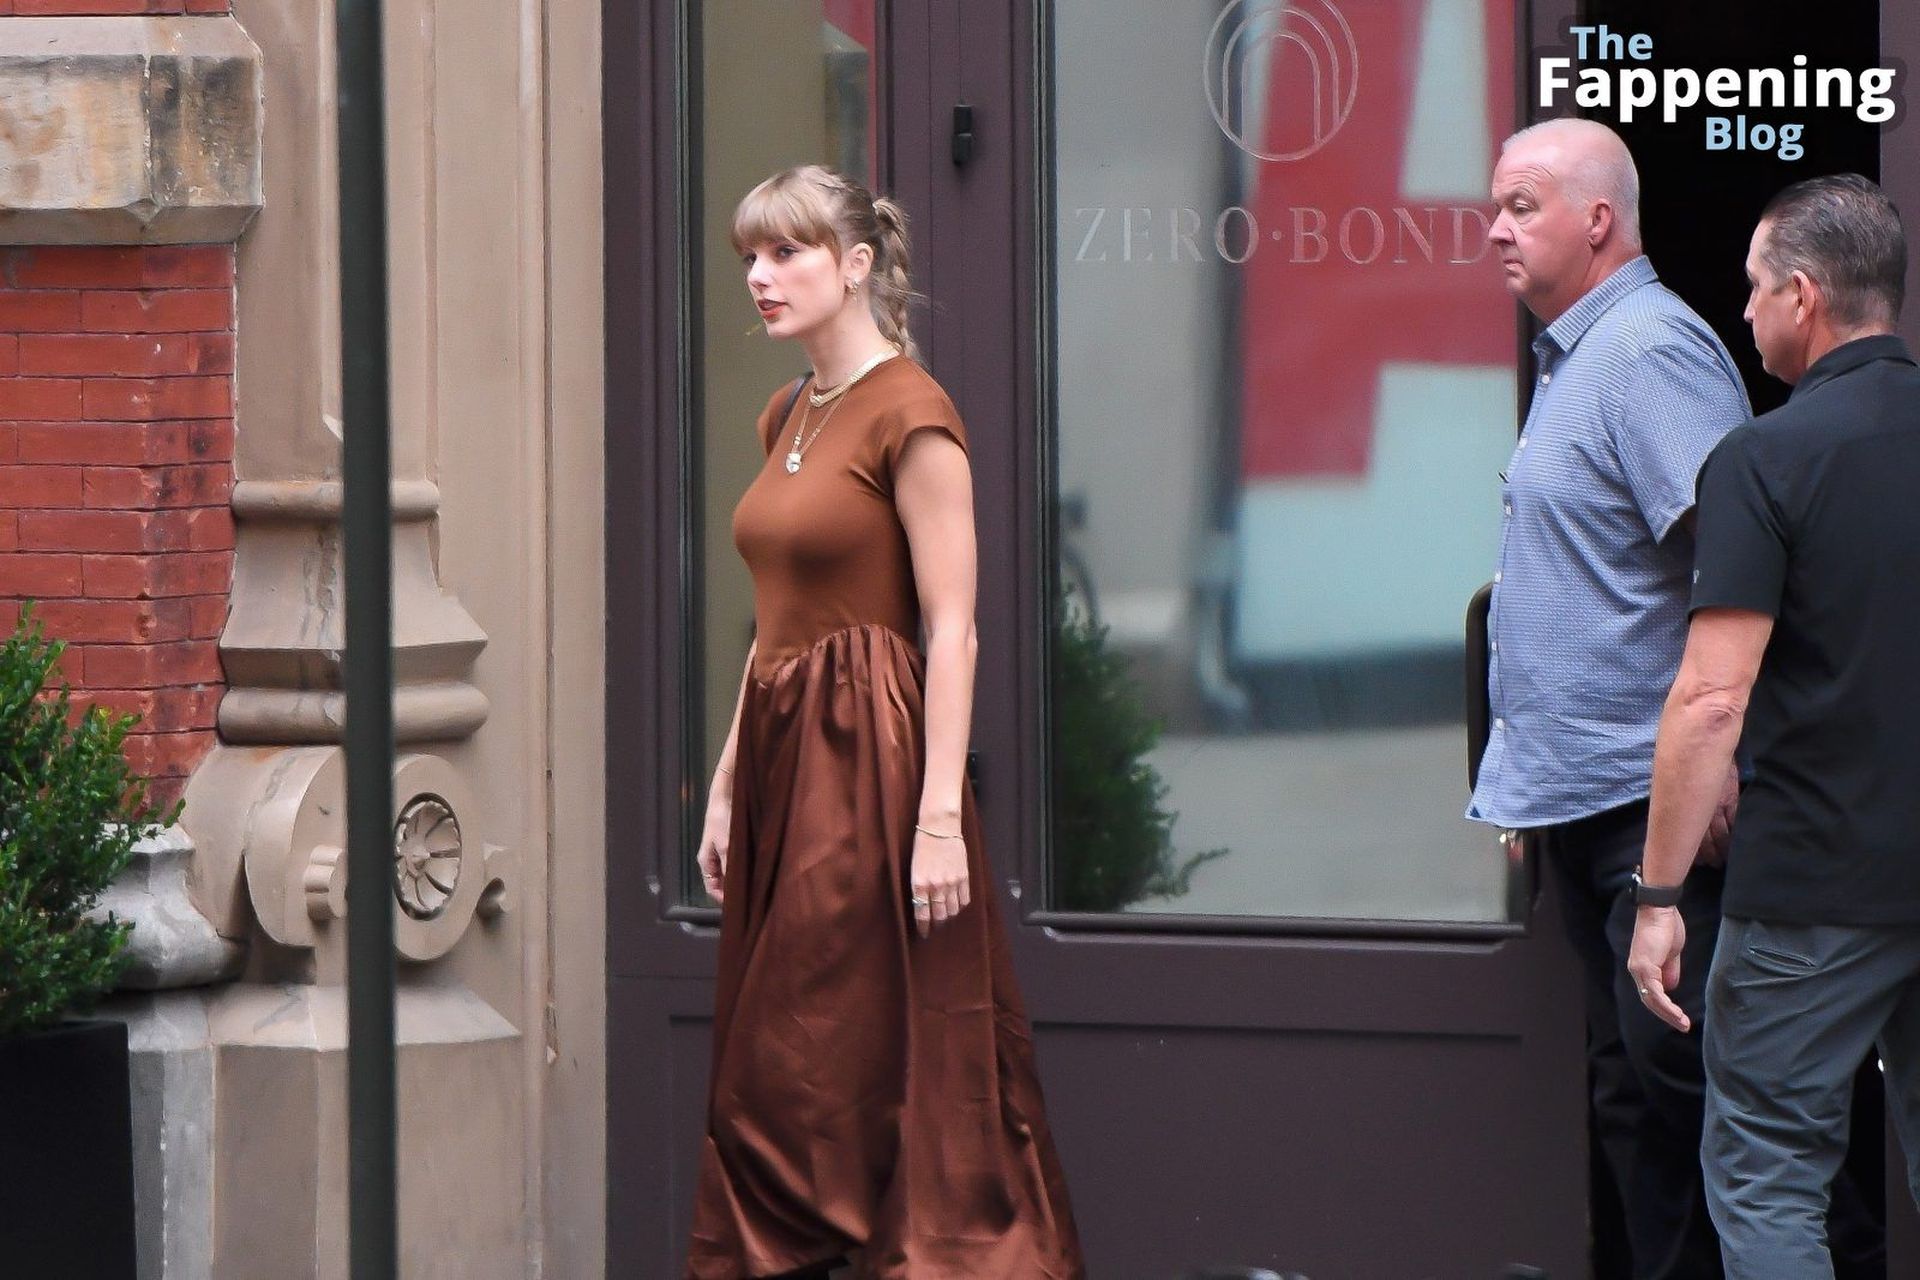 Taylor-Swift-NYC-Busty-Glamour-Zero-Bond-9-thefappeningblog.com_.jpg